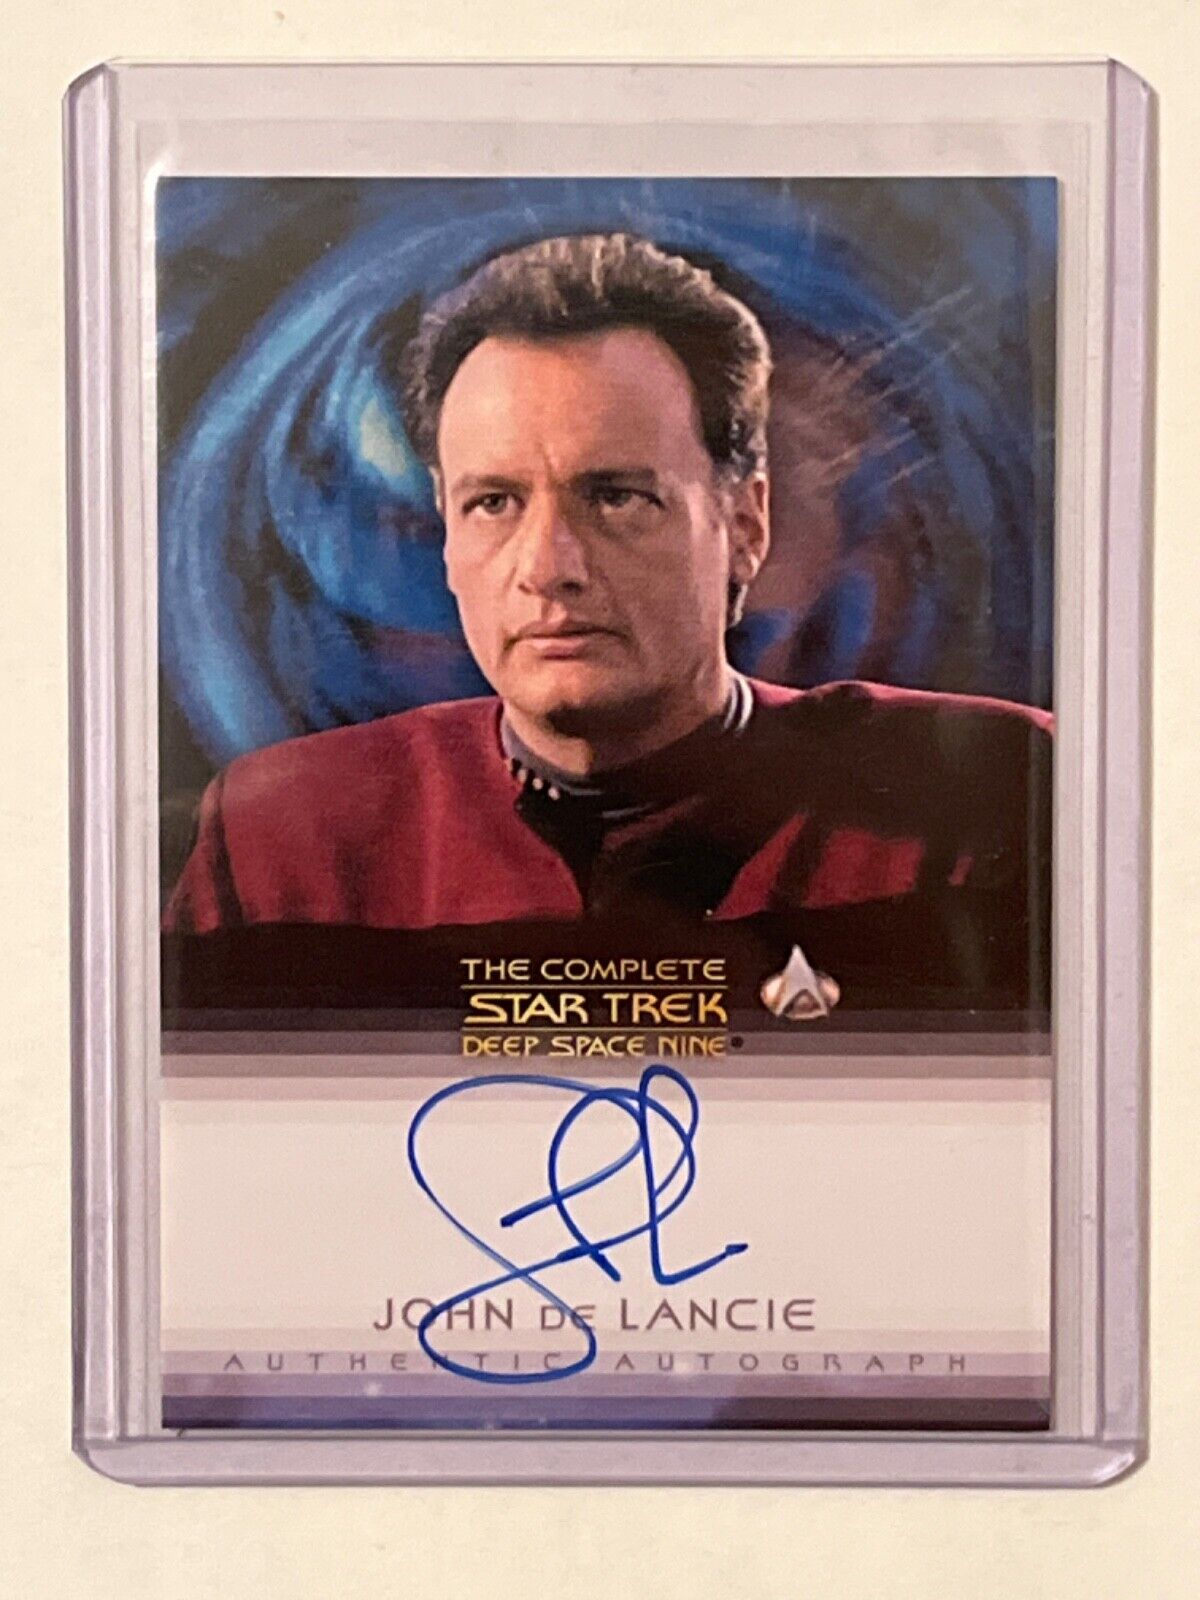 Star Trek Deep Space Nine John de Lancie as Q Autograph Card